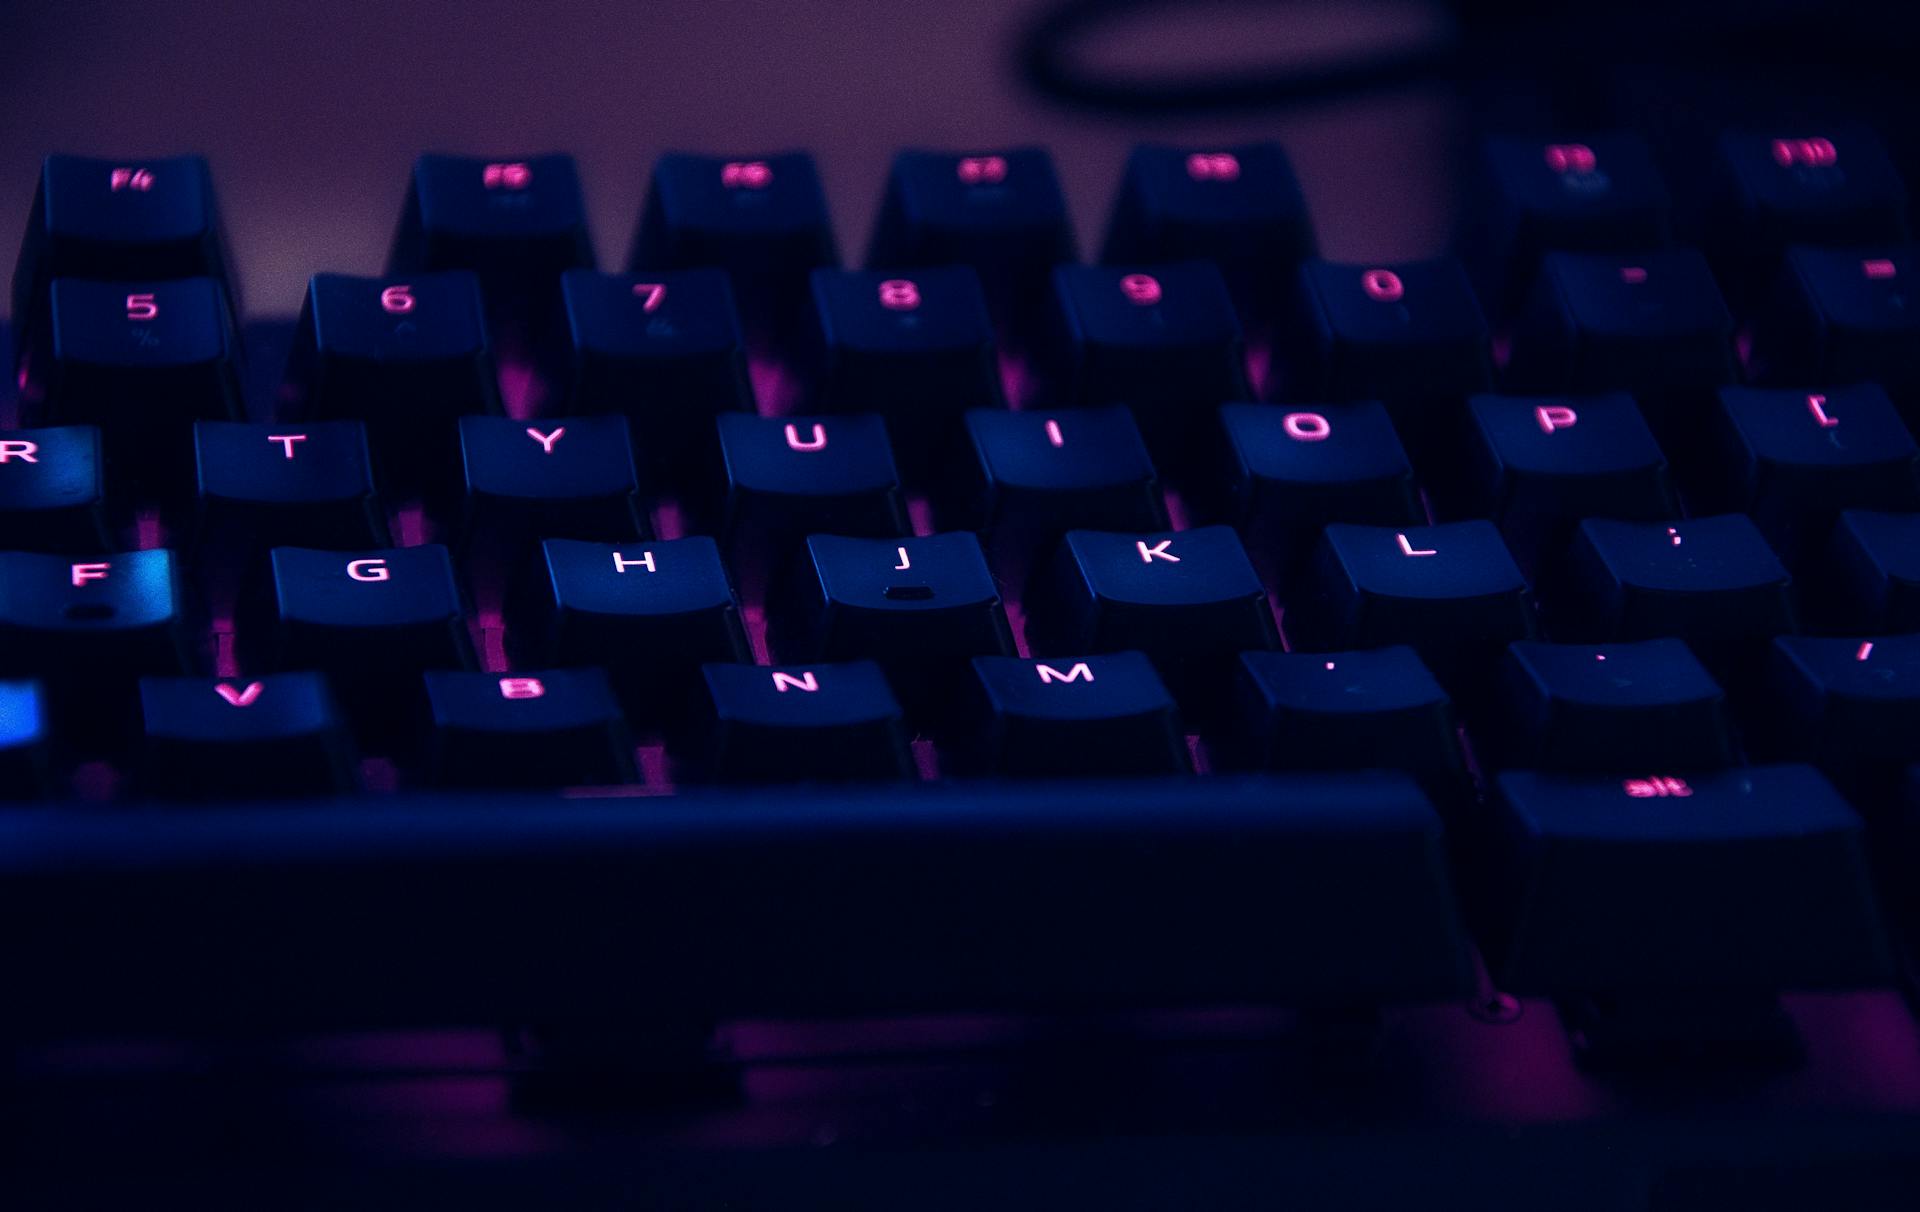 Illuminated keys on a keyboard